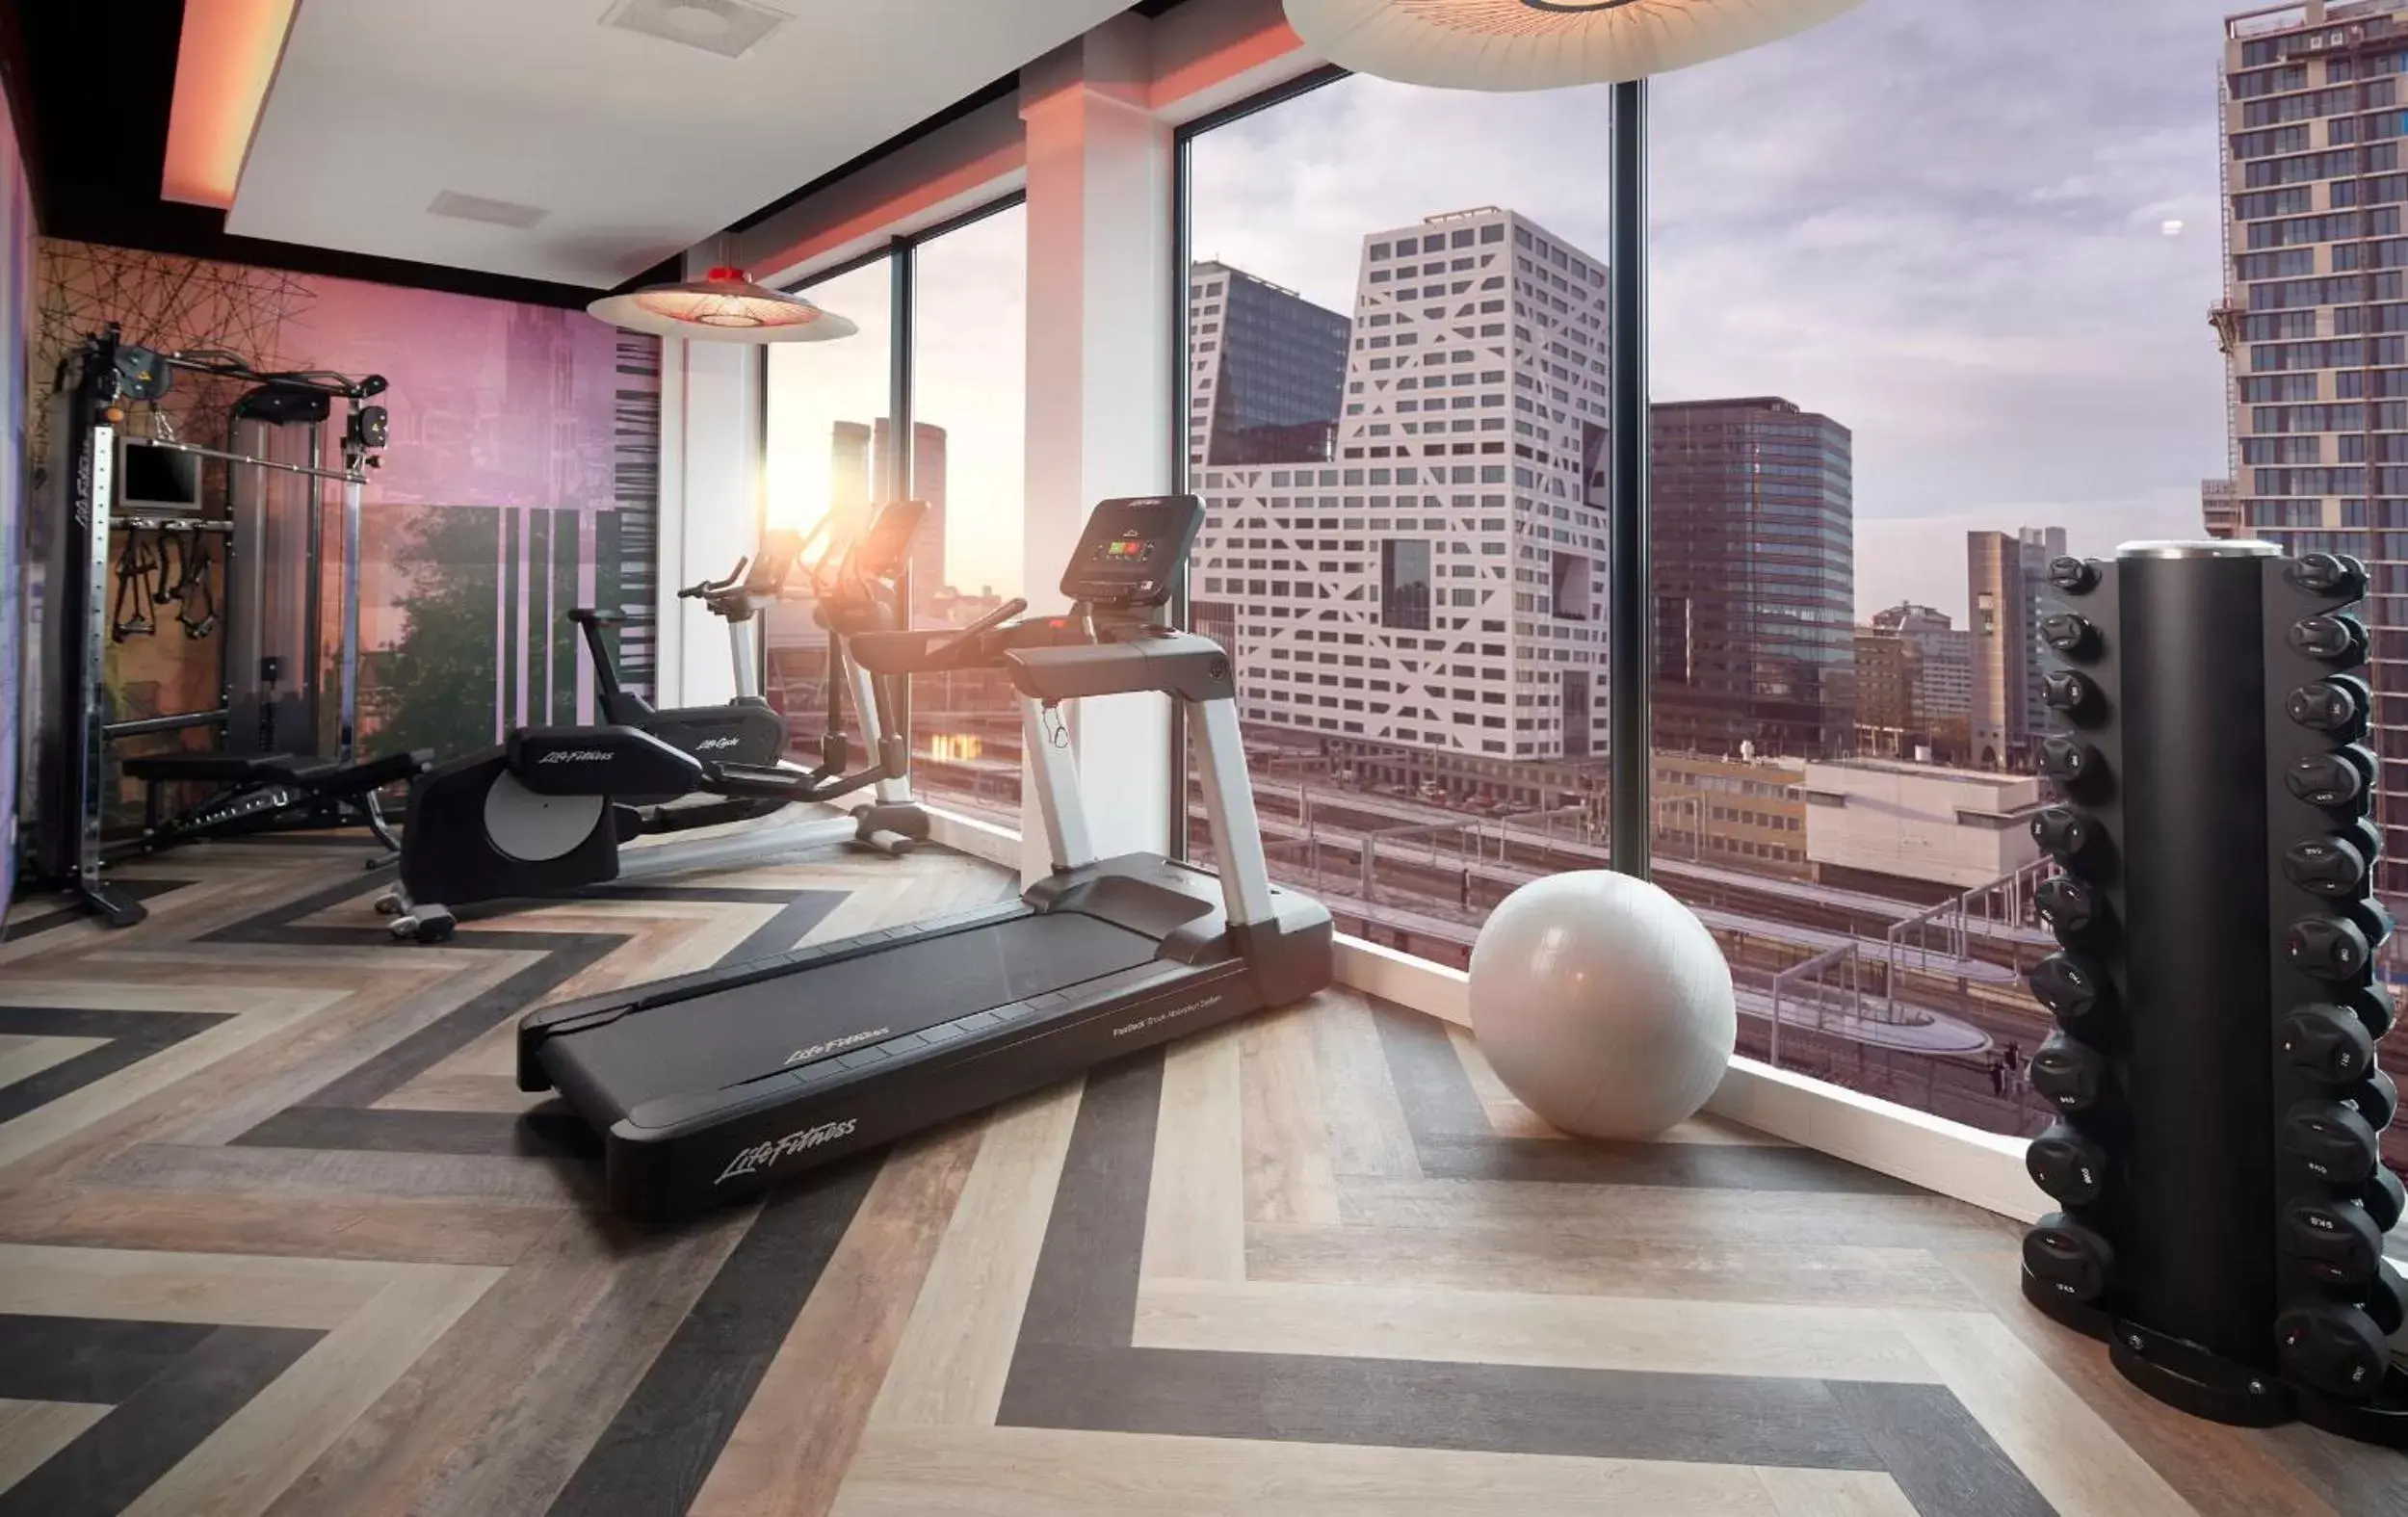 Fitness centre/facilities, Fitness Center/Facilities in Inntel Hotels Utrecht Centre